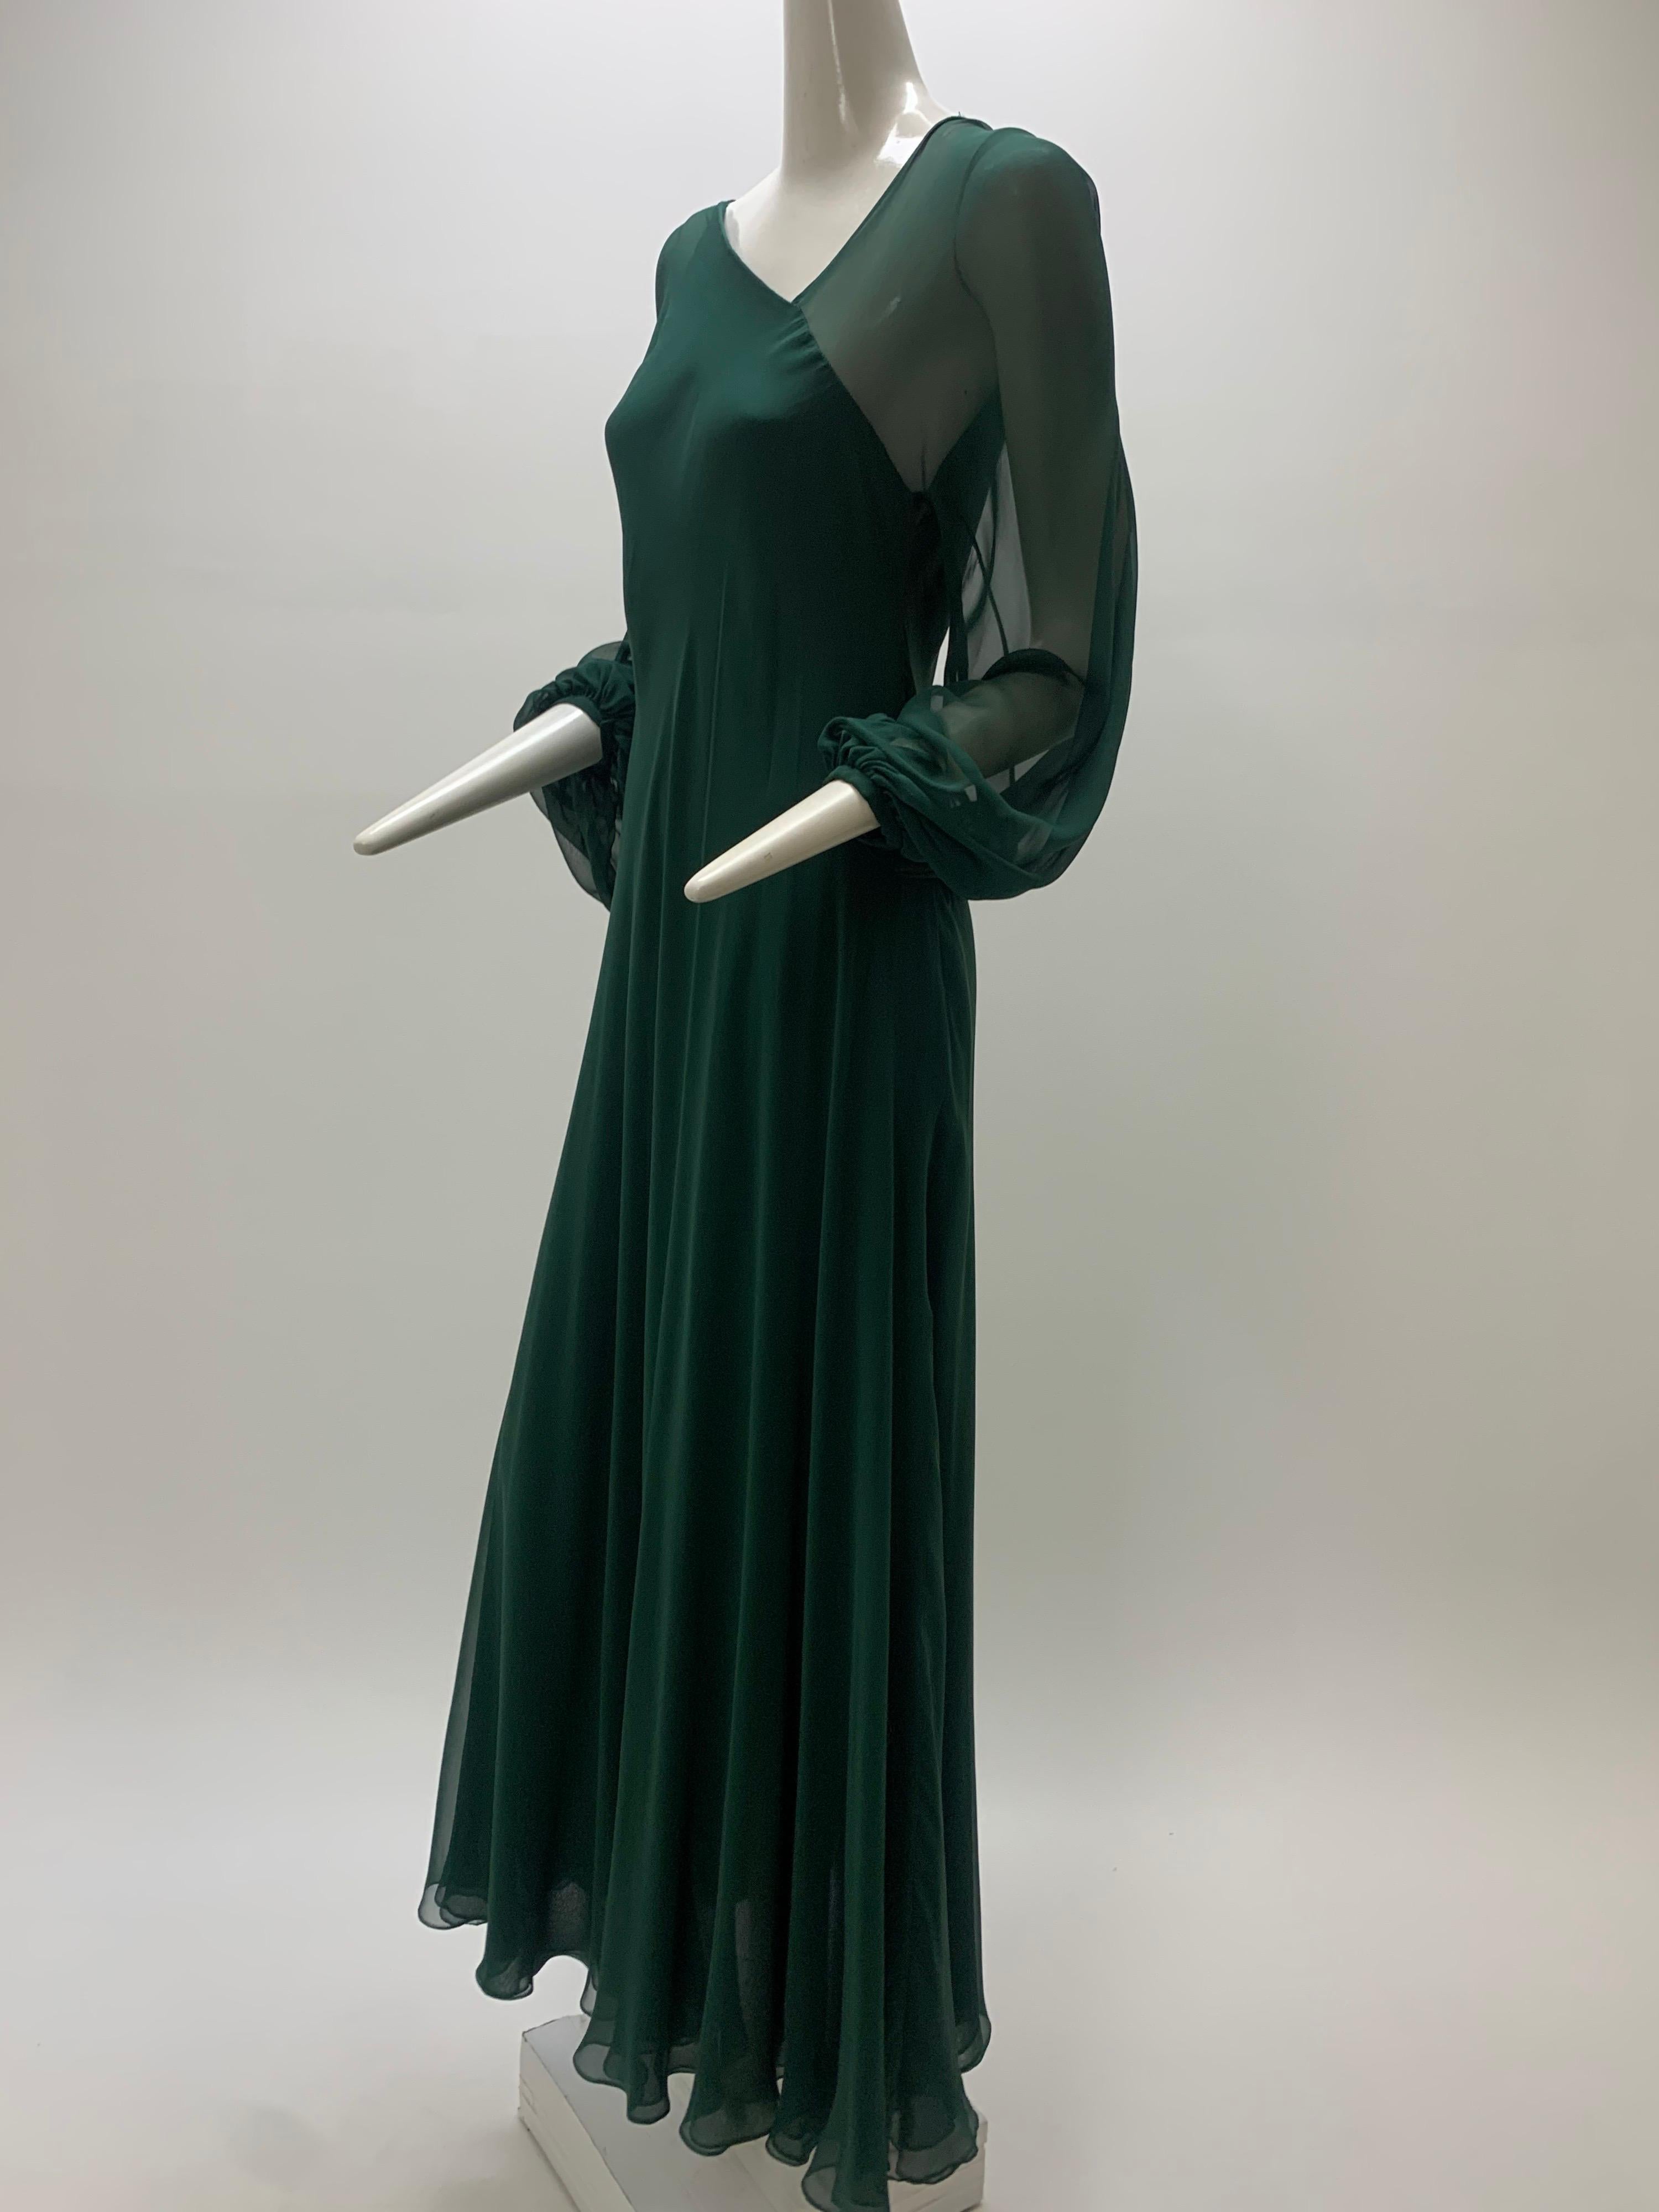 halston dress 1970s